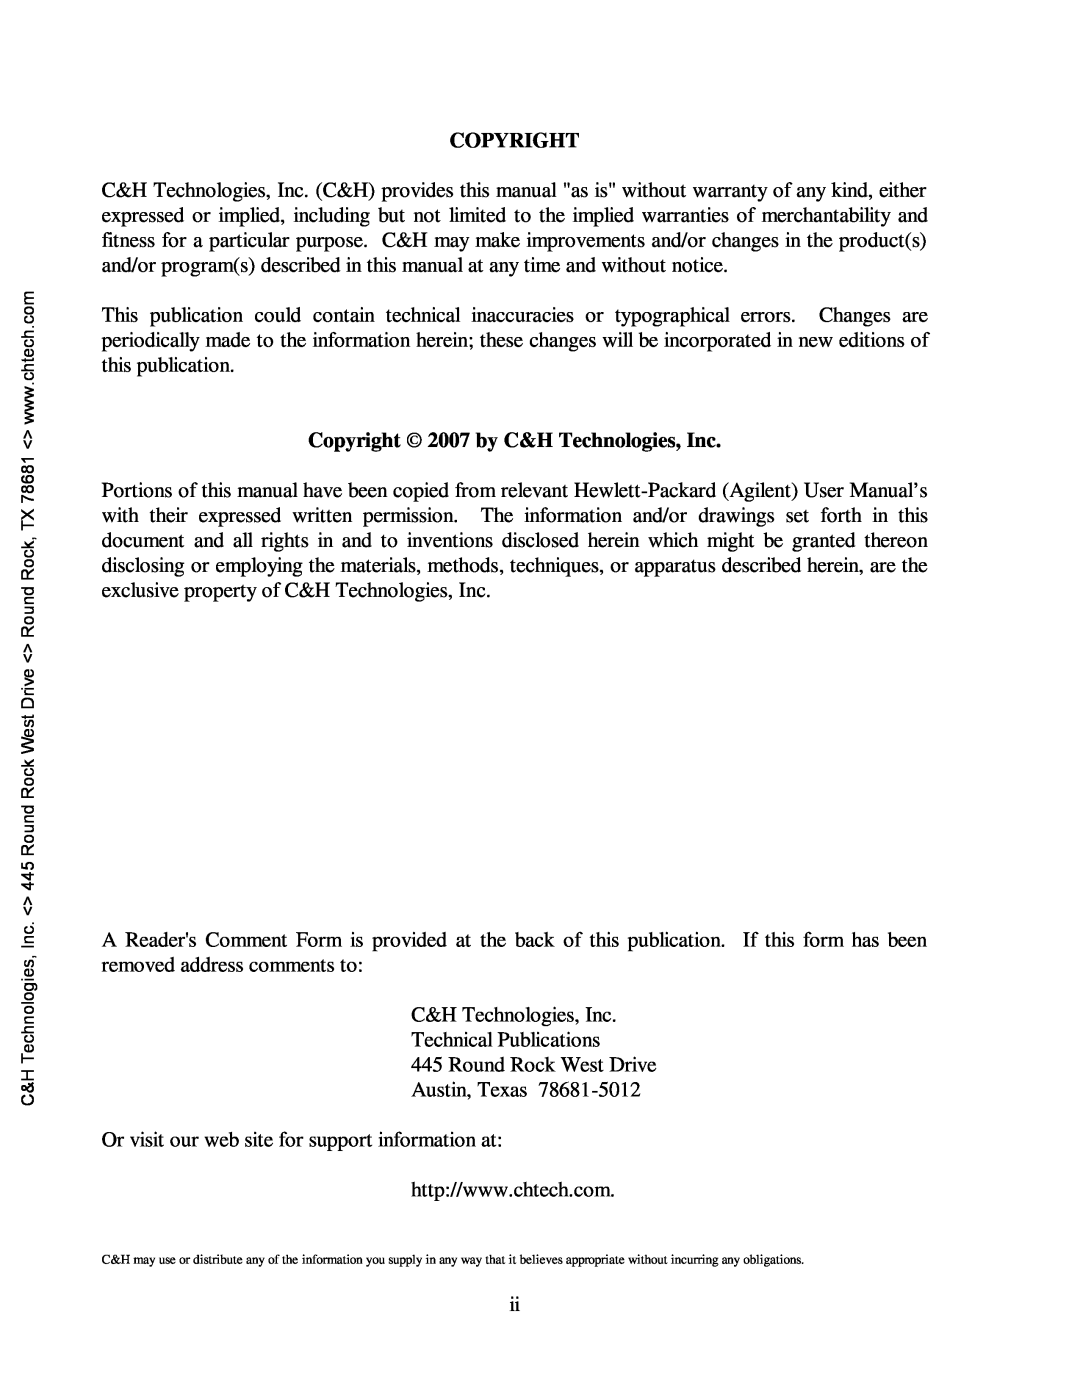 CH Tech M222 user manual Copyright 2007 by C&H Technologies, Inc 